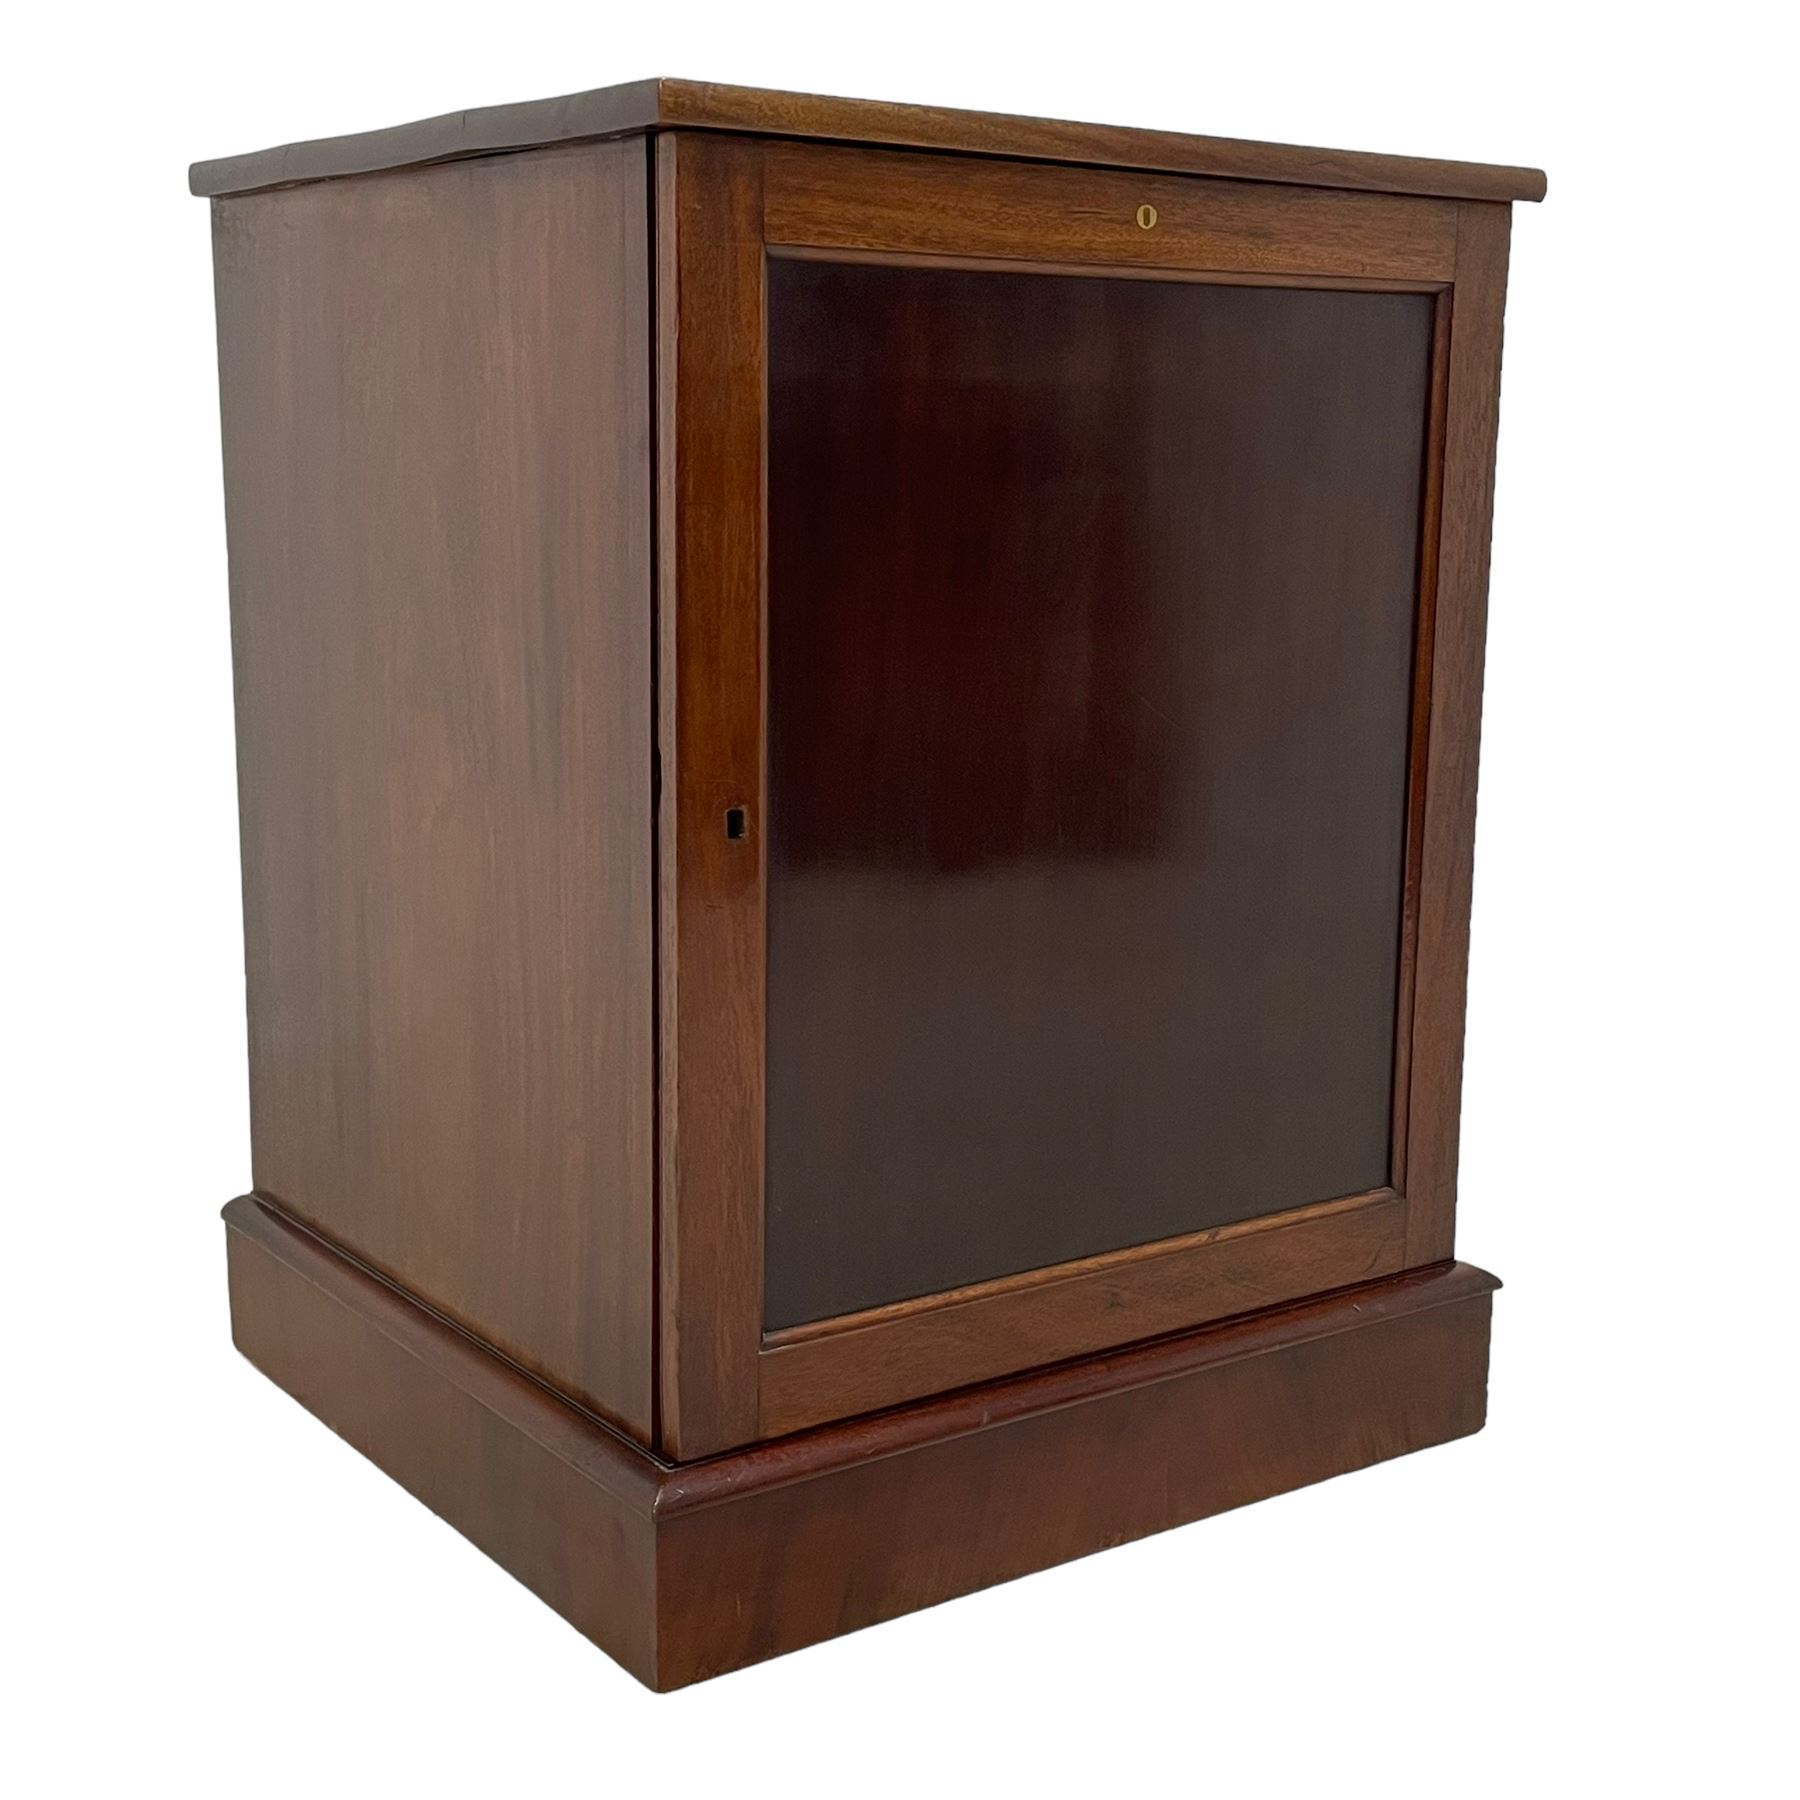 20th century mahogany pedestal collectors filing cabinet - Image 3 of 5